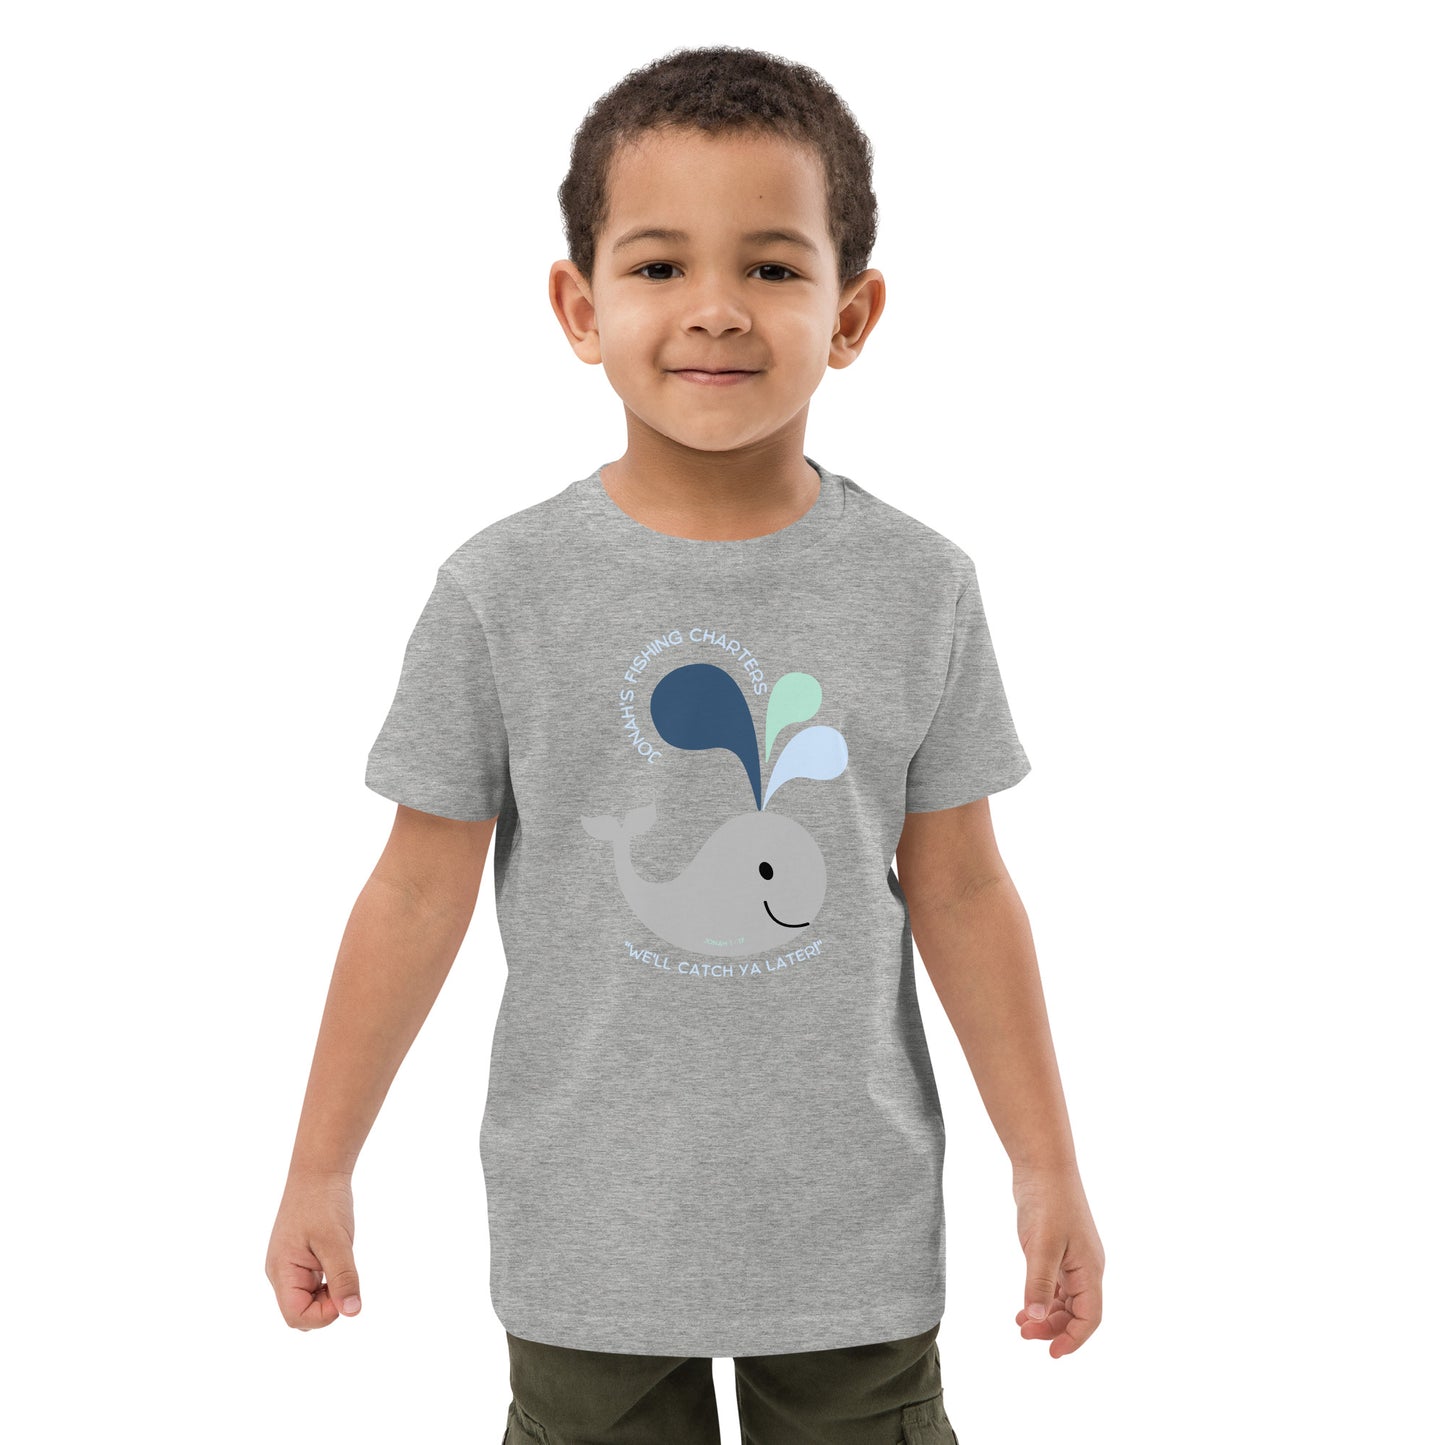 Jonah's Fishing Charters "We'll Catch Ya Later" Organic cotton kids t-shirt